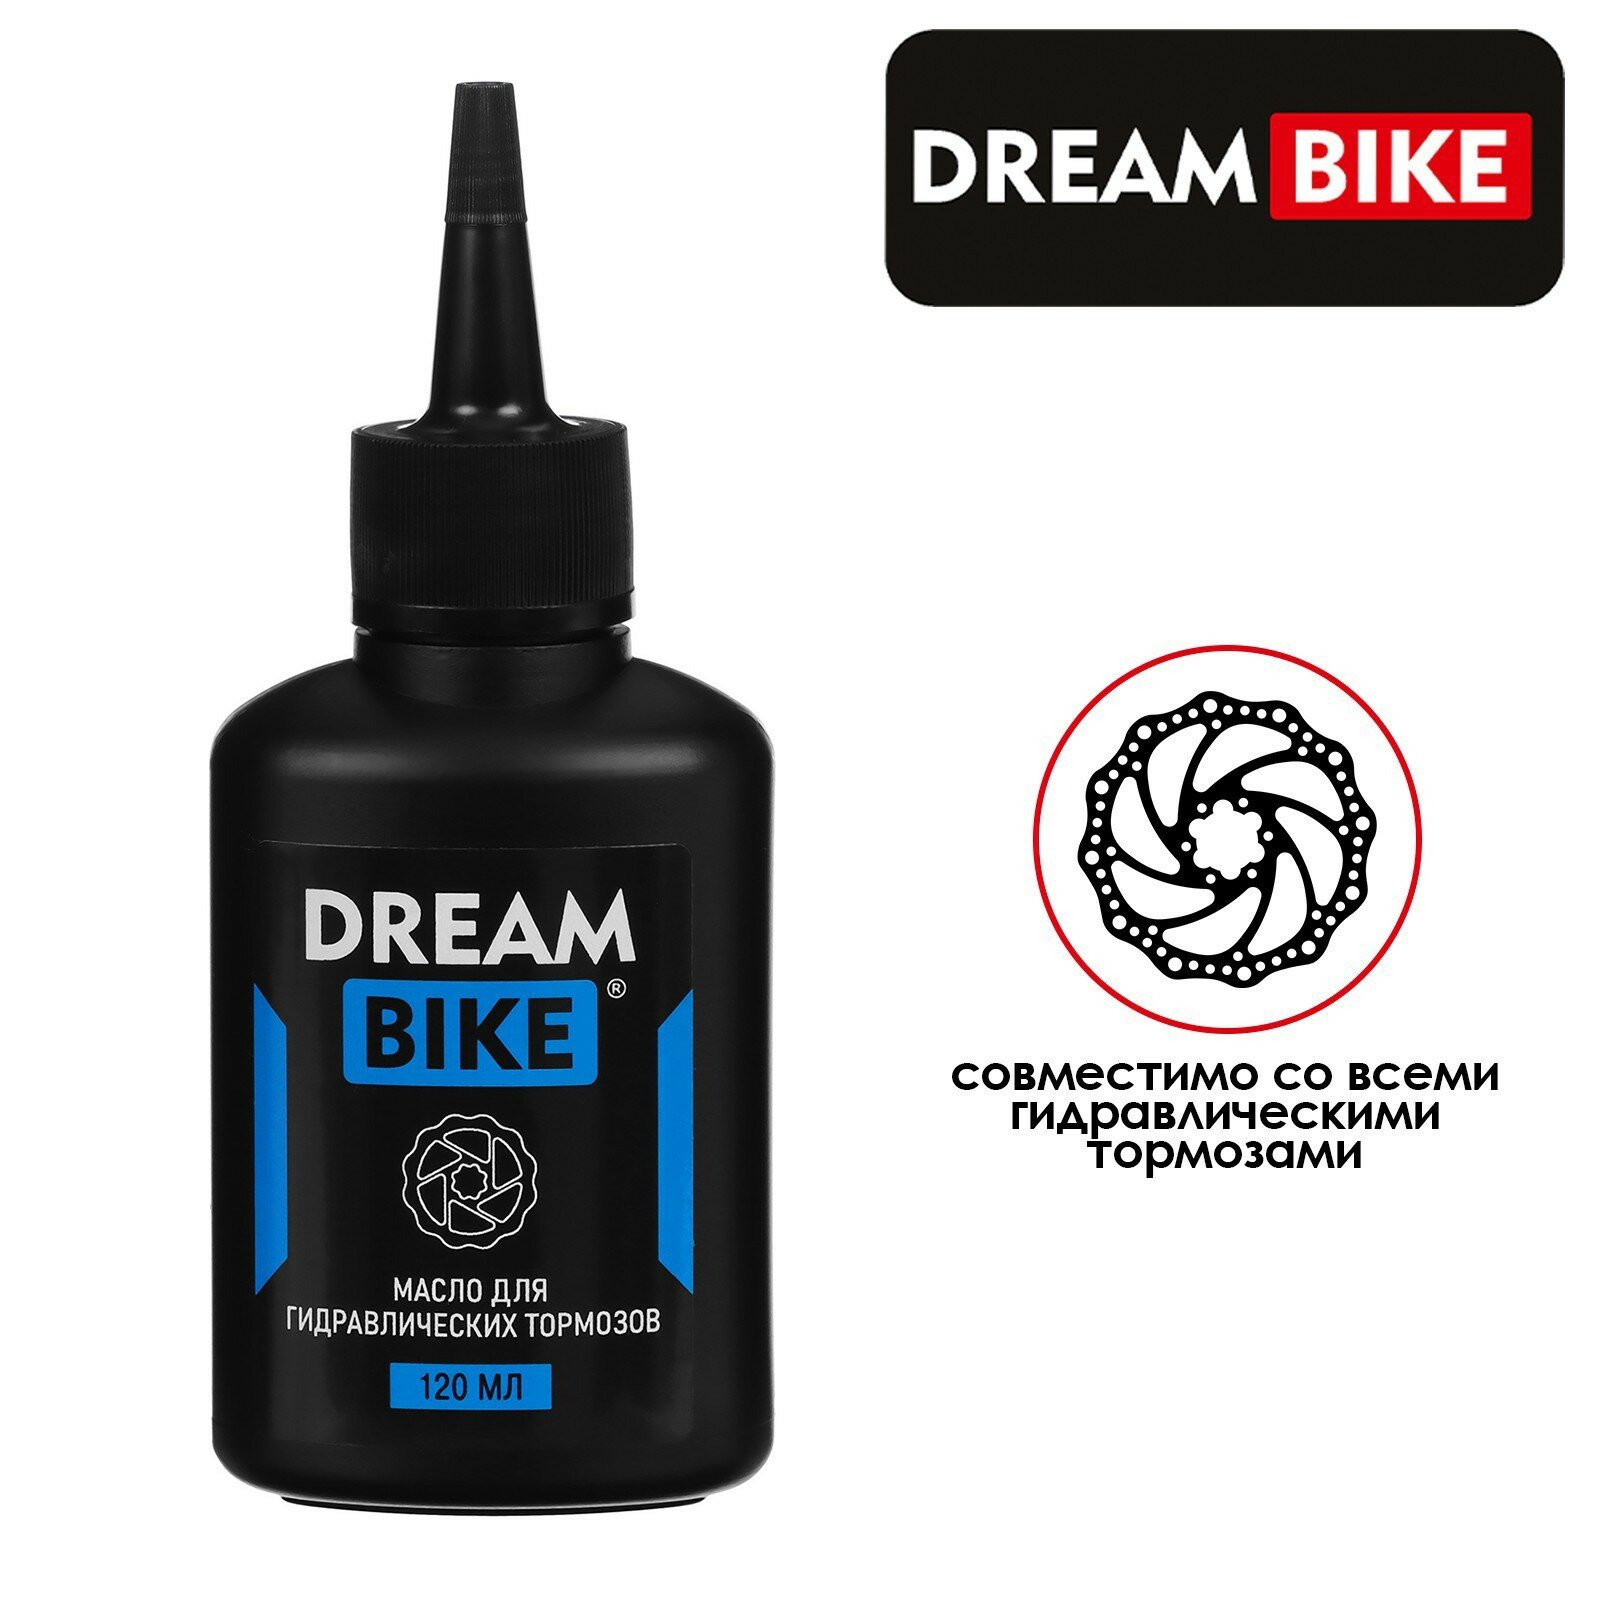 Масло для гидравлических тормозов Dream bike 120 мл